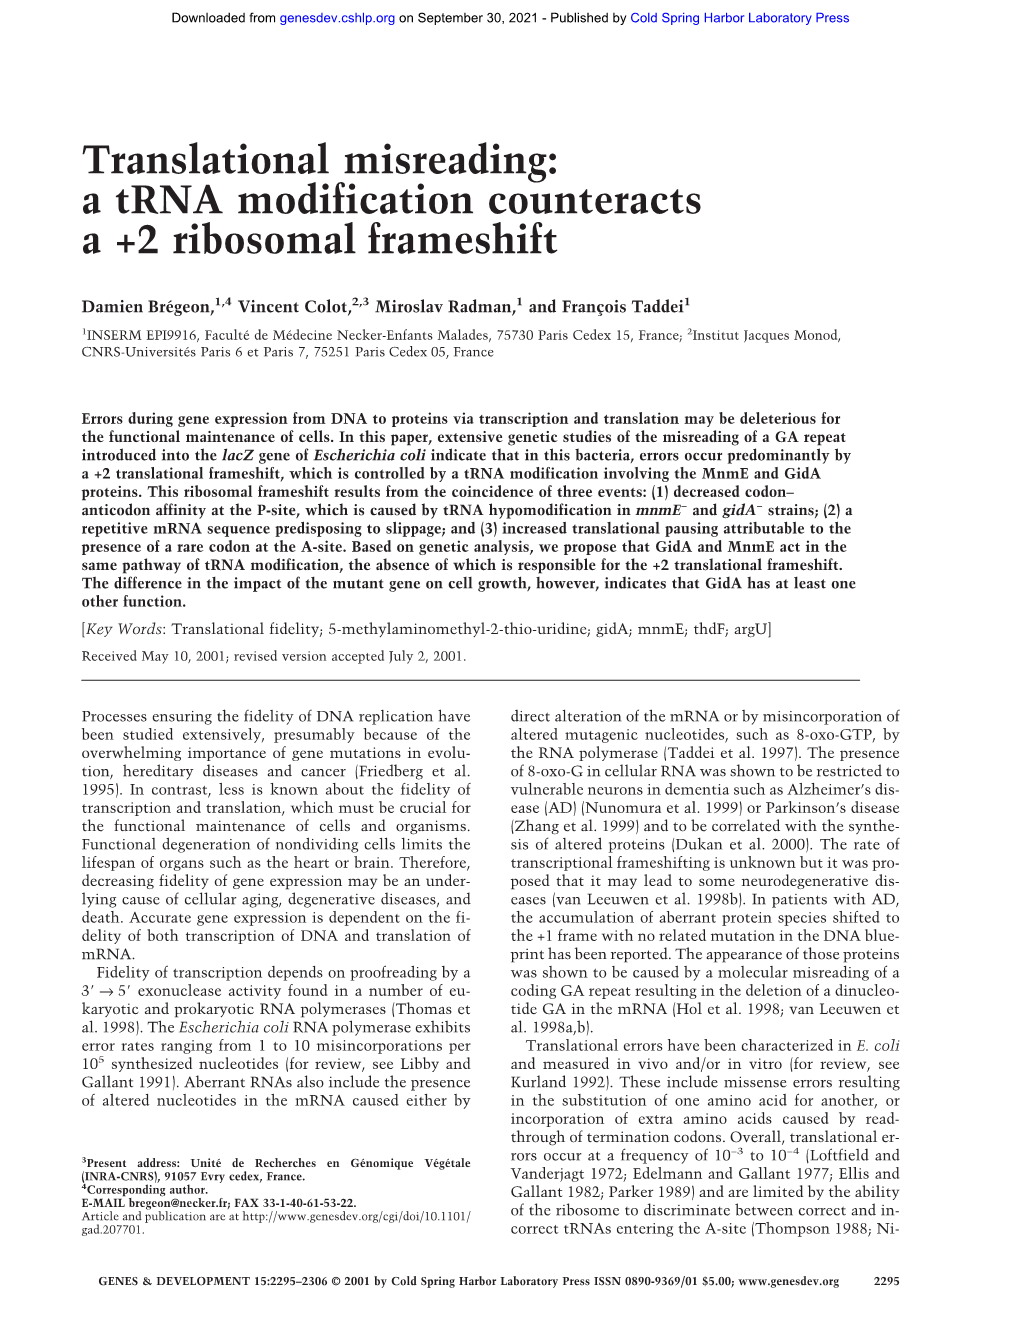 A Trna Modification Counteracts a +2 Ribosomal Frameshift